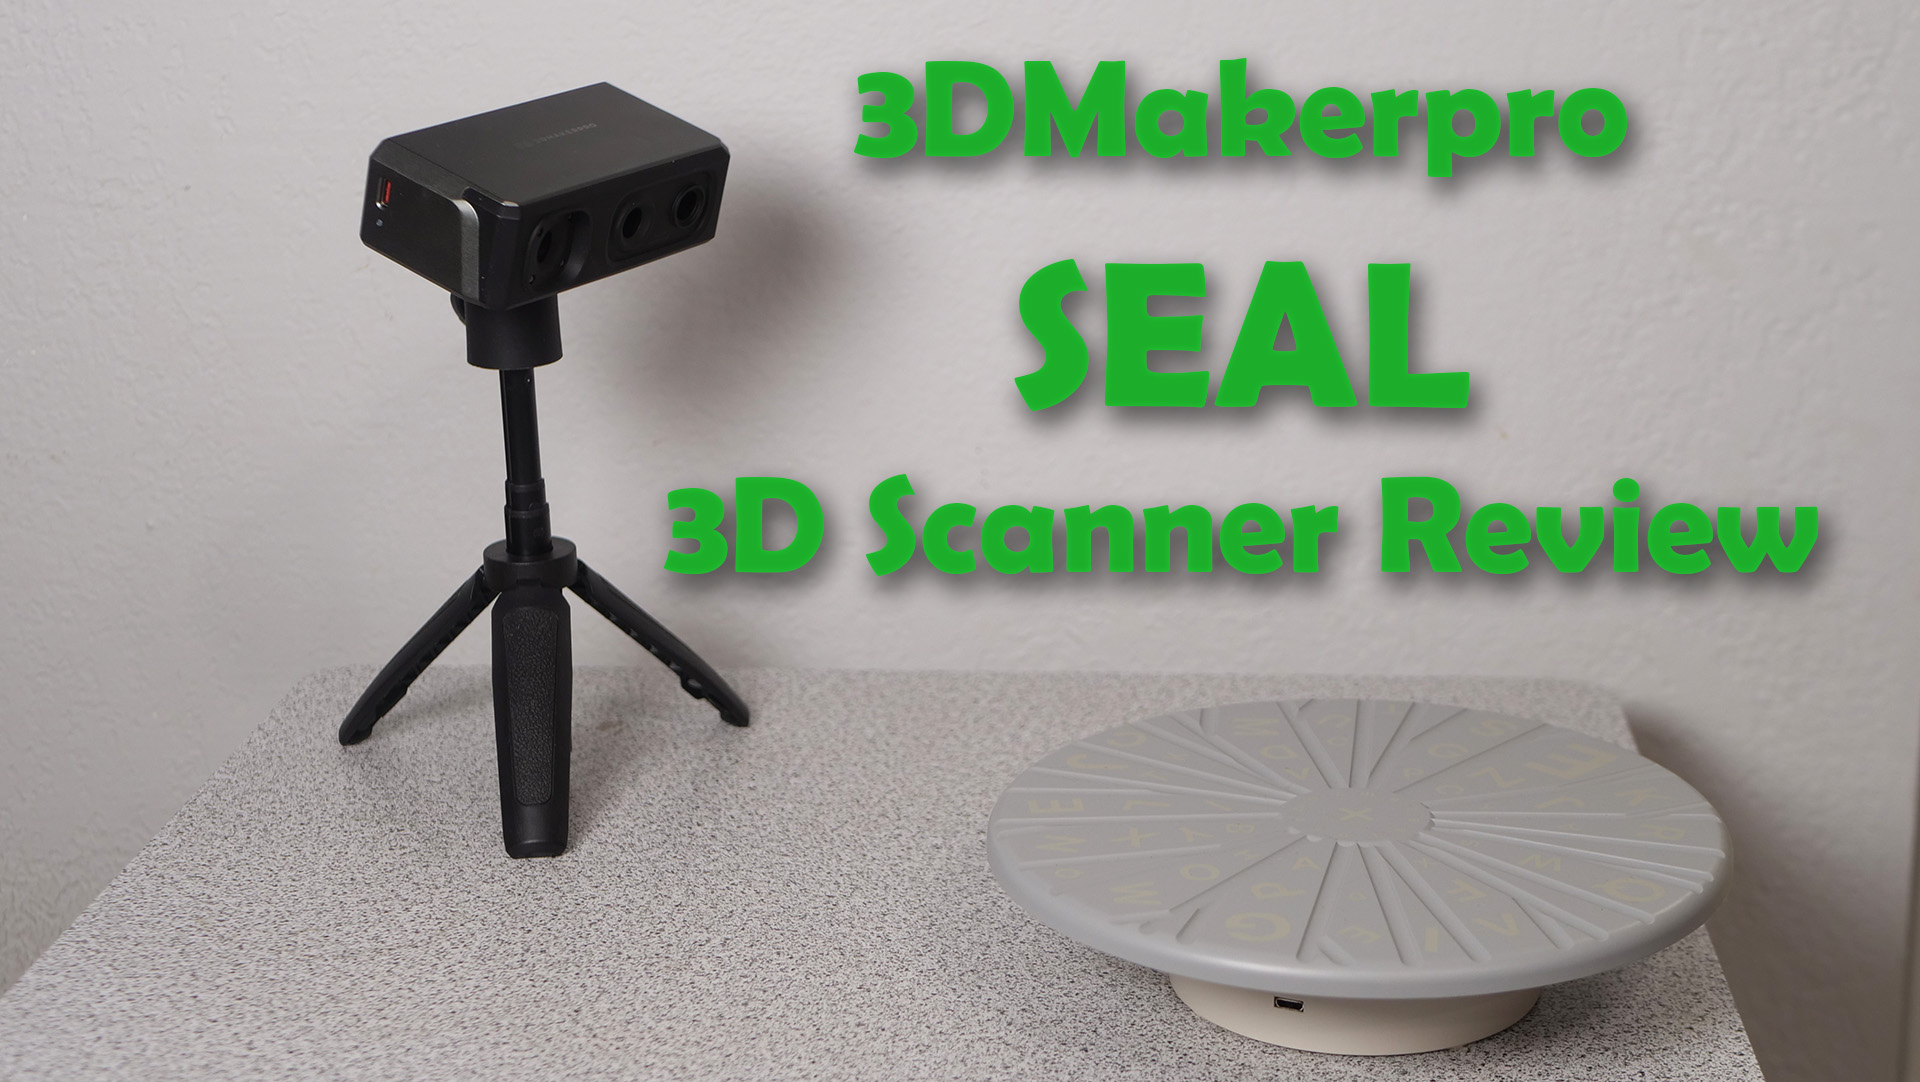 3DMakerpro Seal 3D Scanner Review